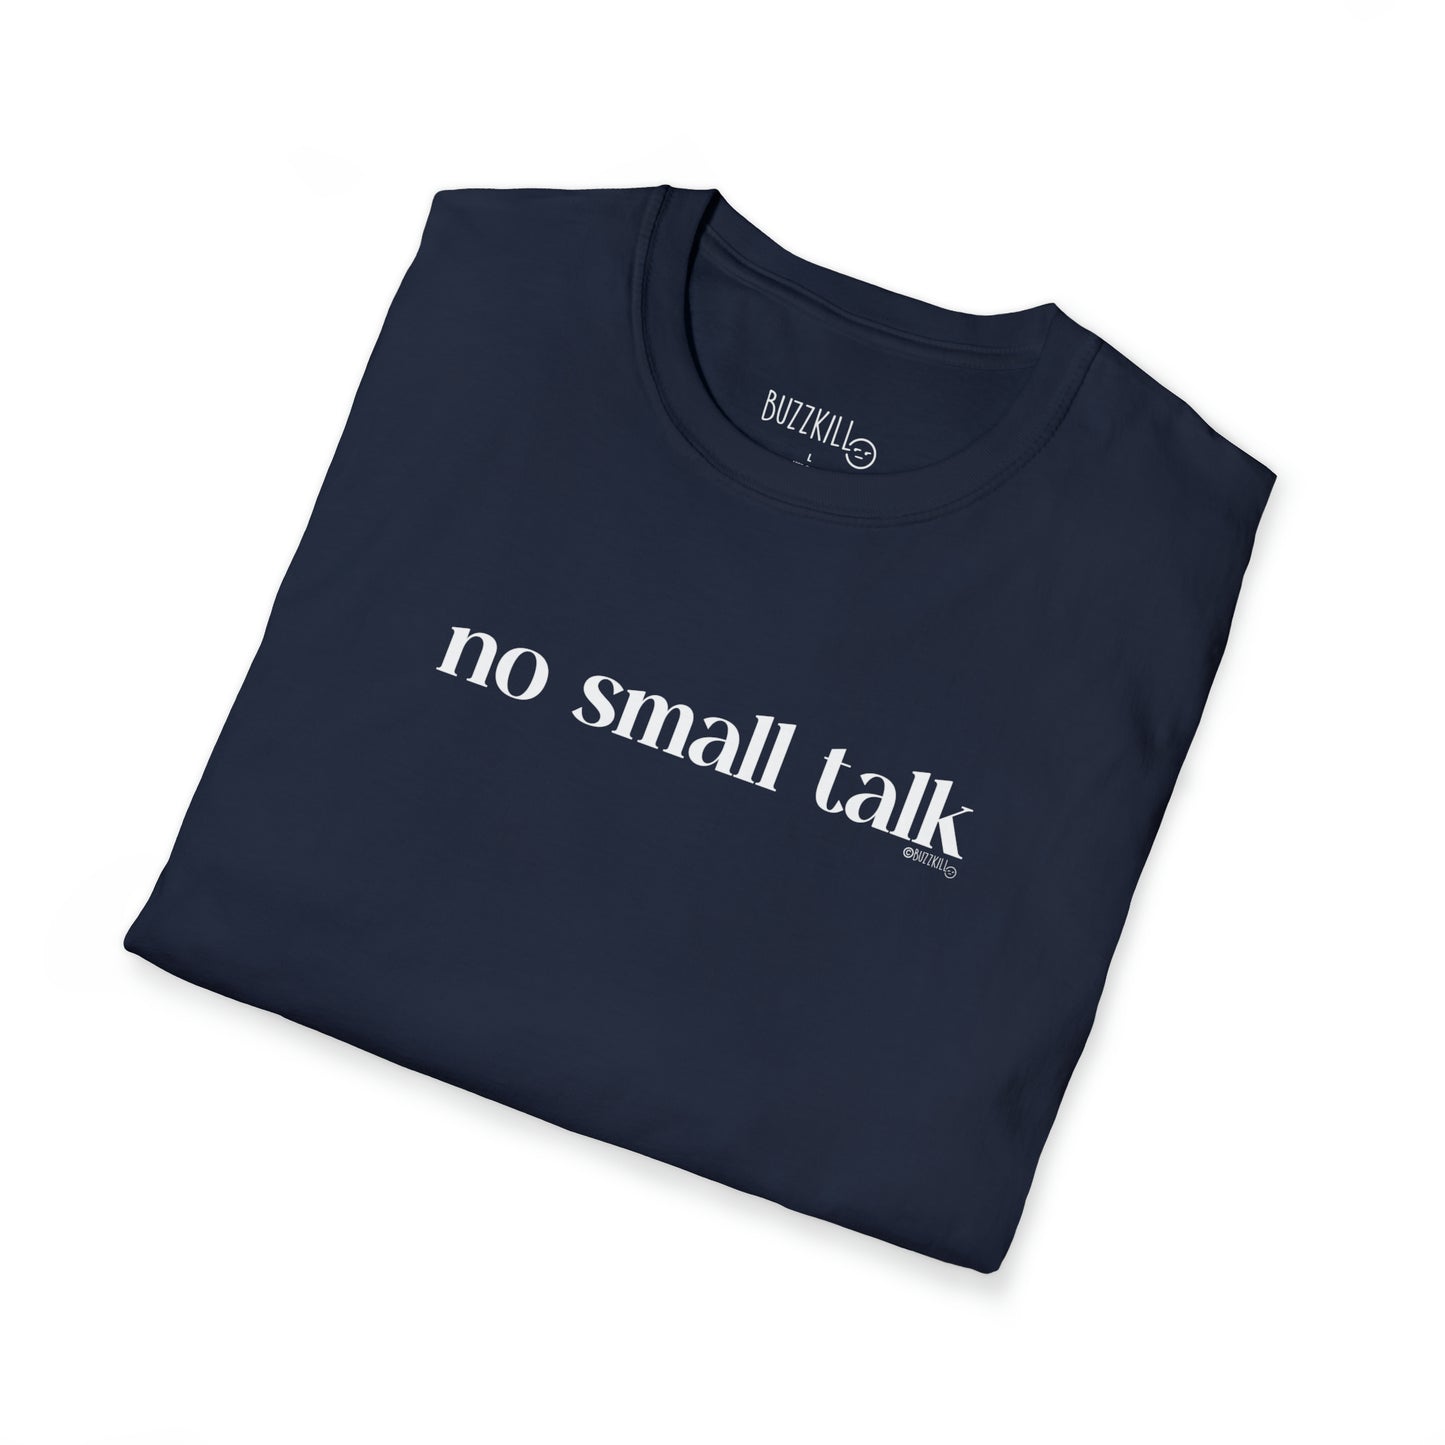 No Small Talk - Unisex Softstyle Tee